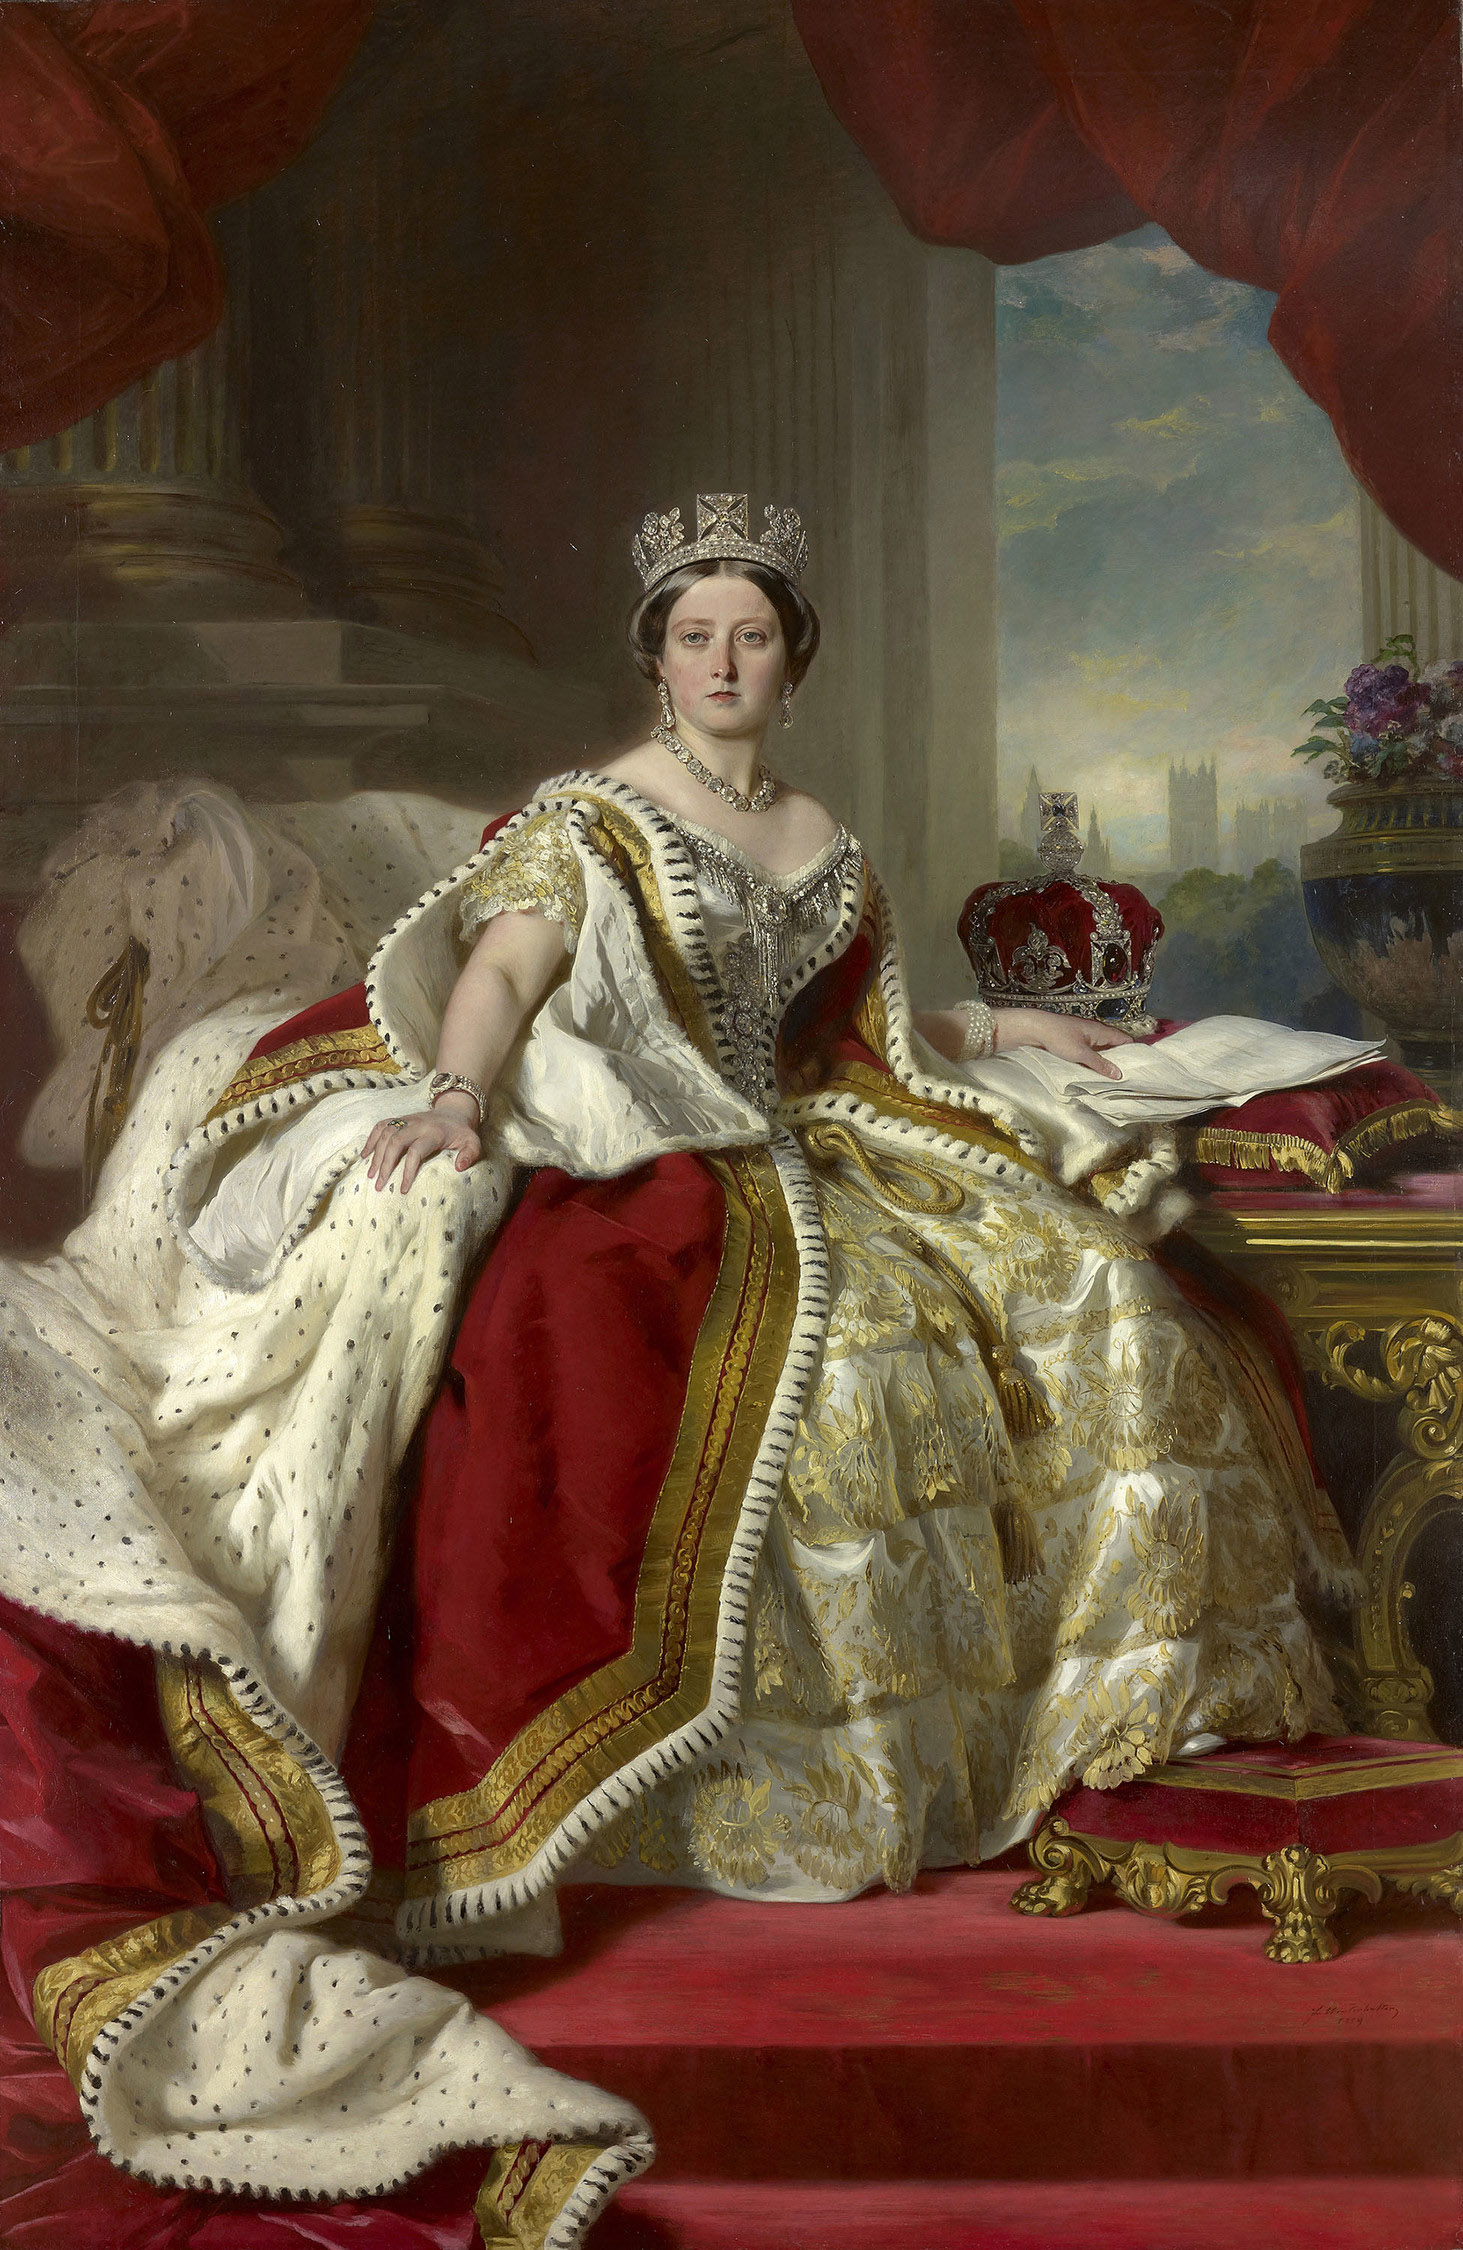 Queen Victoria Portrait by Winterhalter in 1859